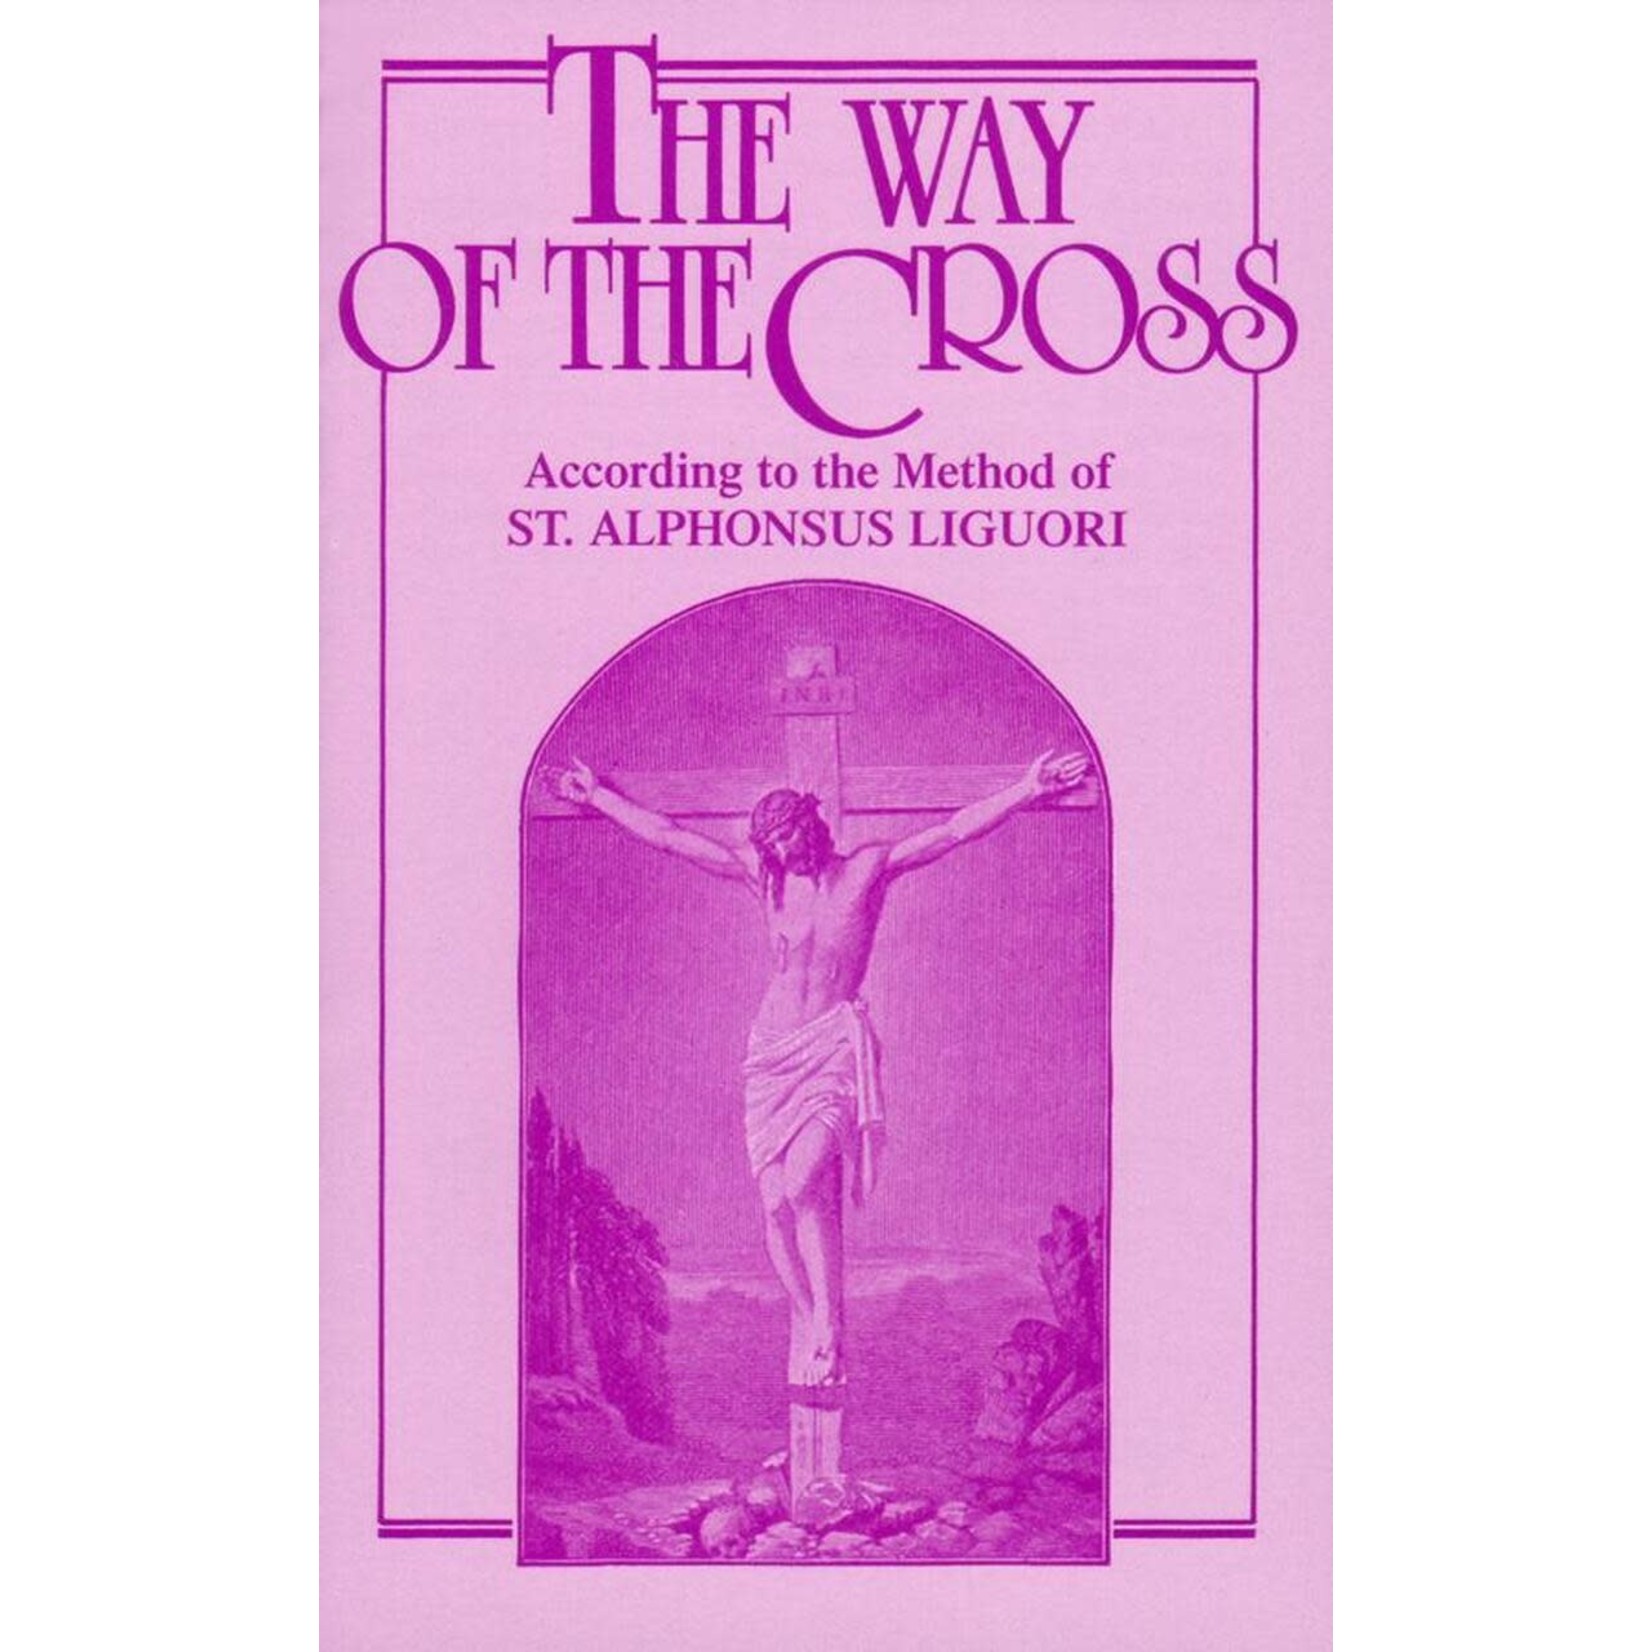 The Way of the Cross According to the Method of St Alphonsus Liguori